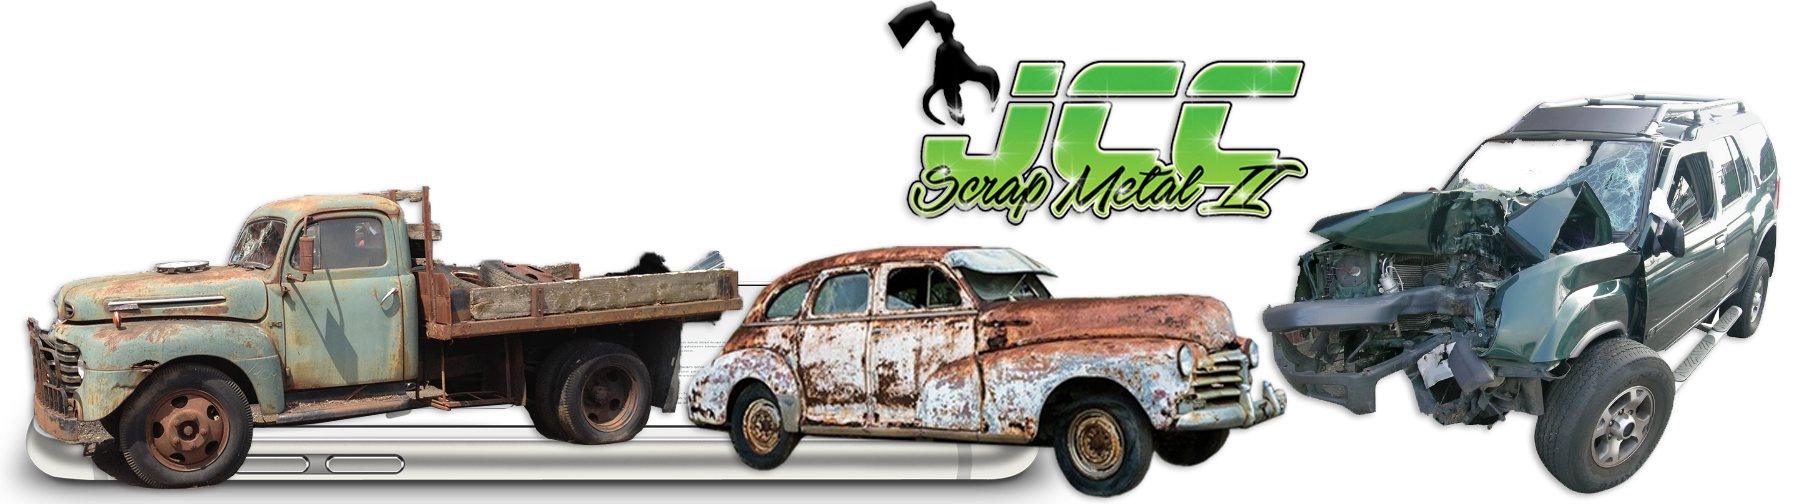 Junk Cars, Trucks, SUVs,Scrap Metal Recycling Professional Services, Lindenhurst, NY - Graphic | Suffolk County, Long Island, NY | JCC Scrap Metal II, 631-816-2000, jccscrapmetal2@gmail.com